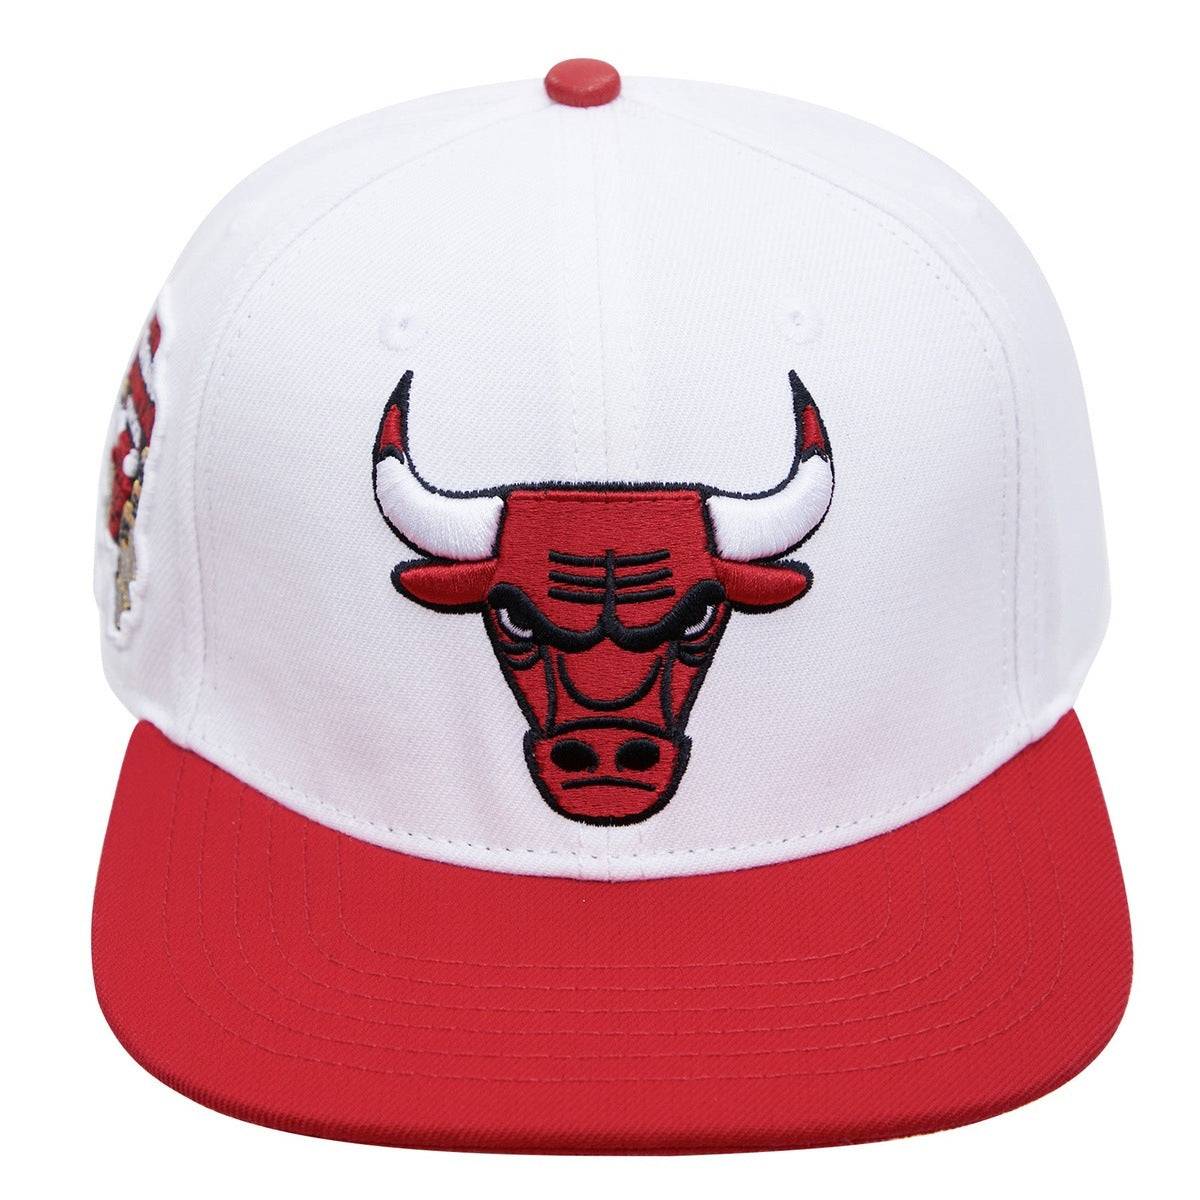 NBA CHICAGO BULLS CLASSIC LOGO UNISEX SNAPBACK HAT (WHITE)